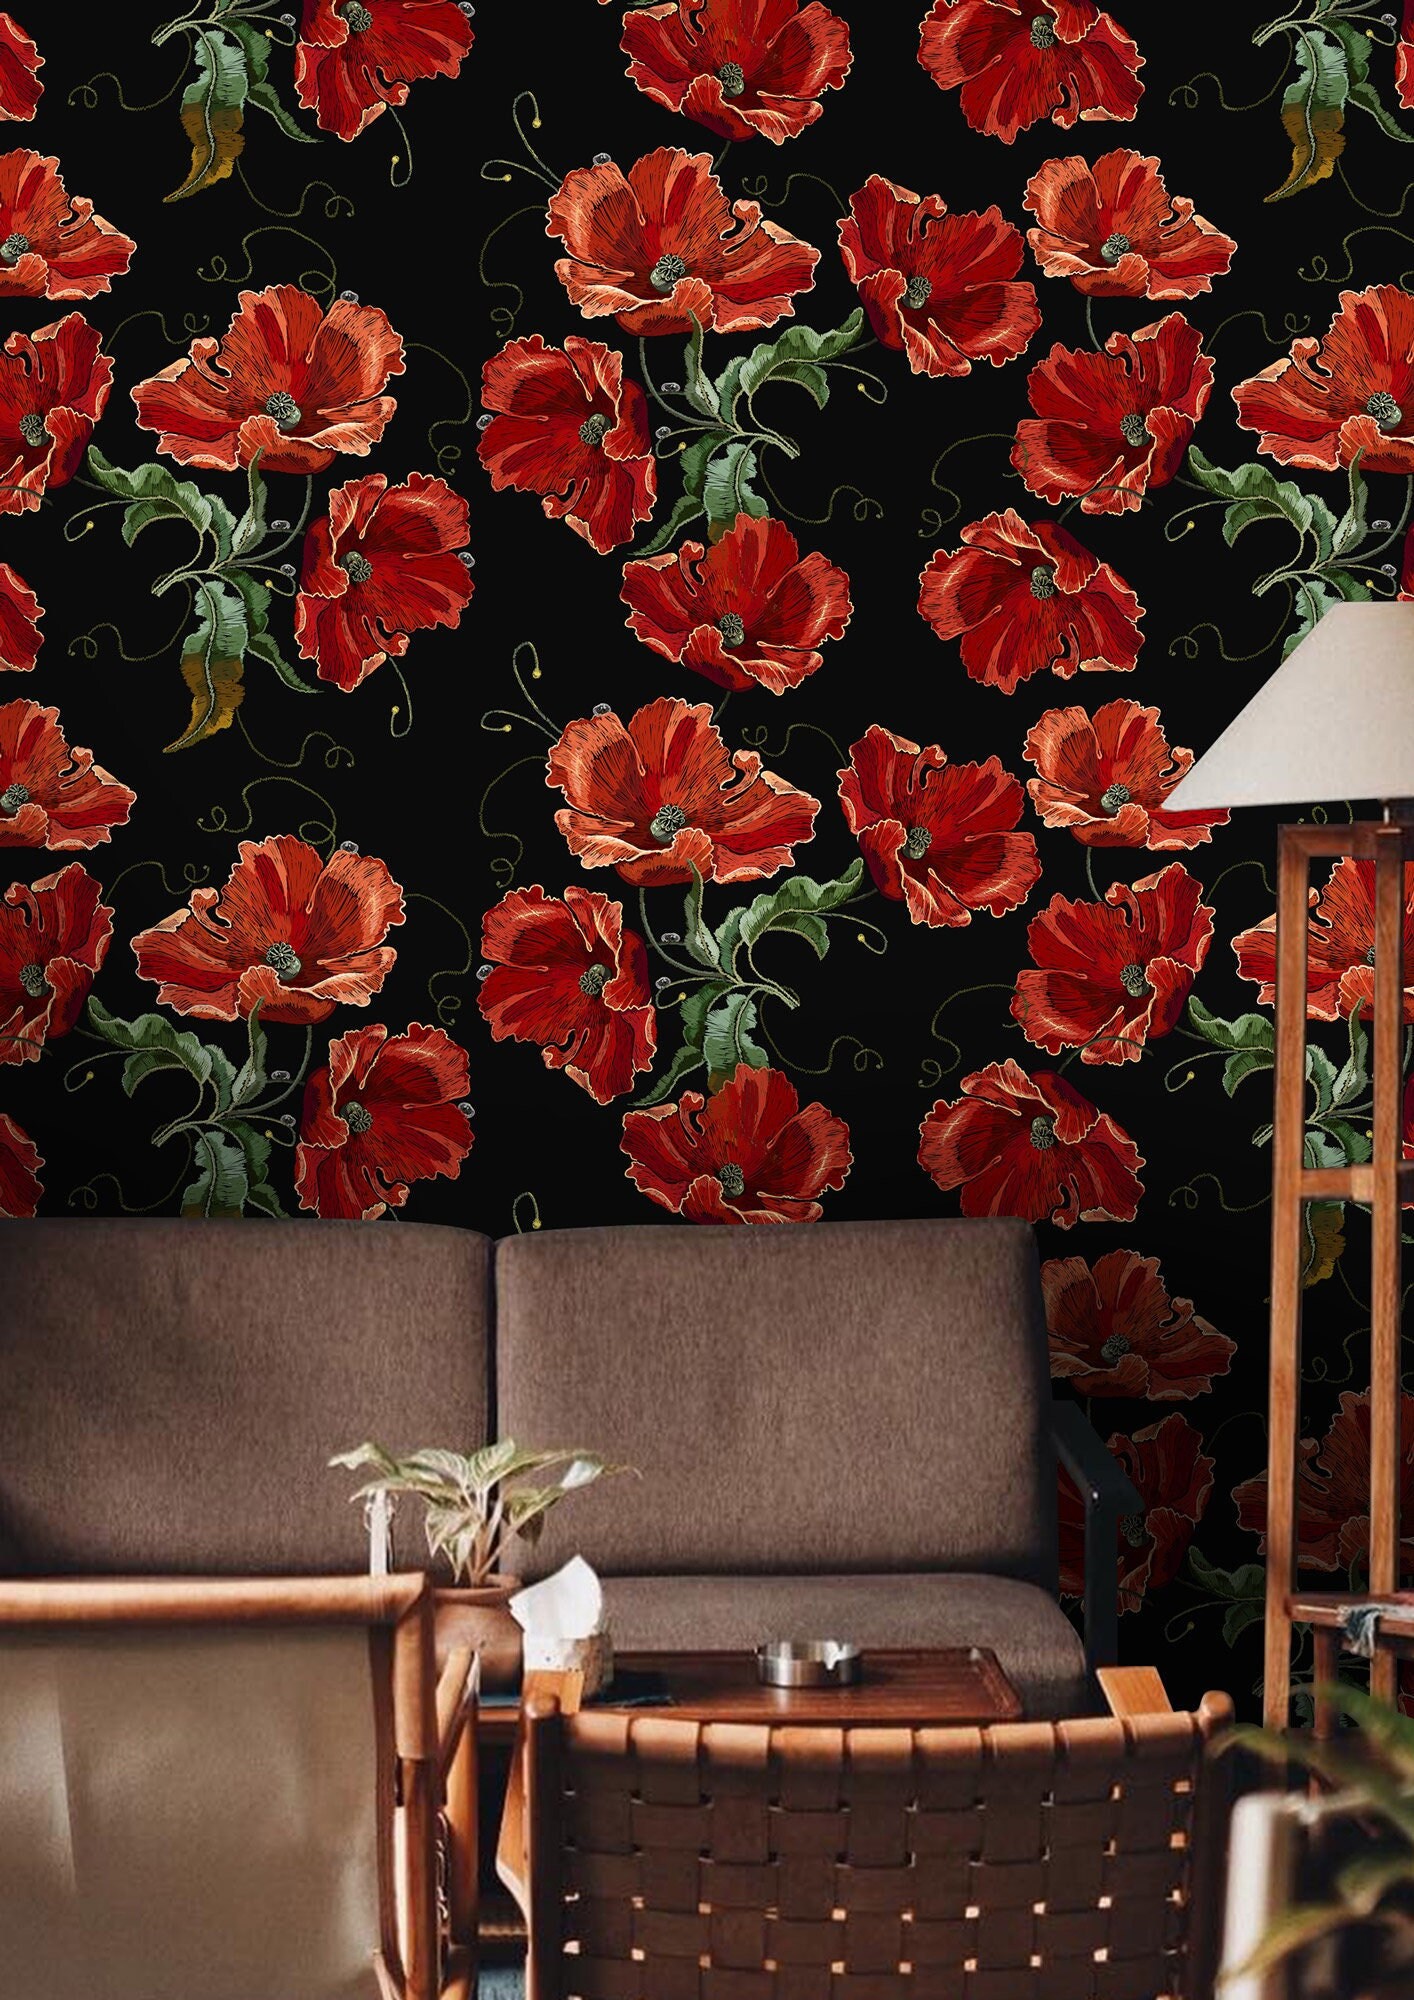 Premium Photo  Black ornate flower background and grim gothic wallpaper  neural network generated art